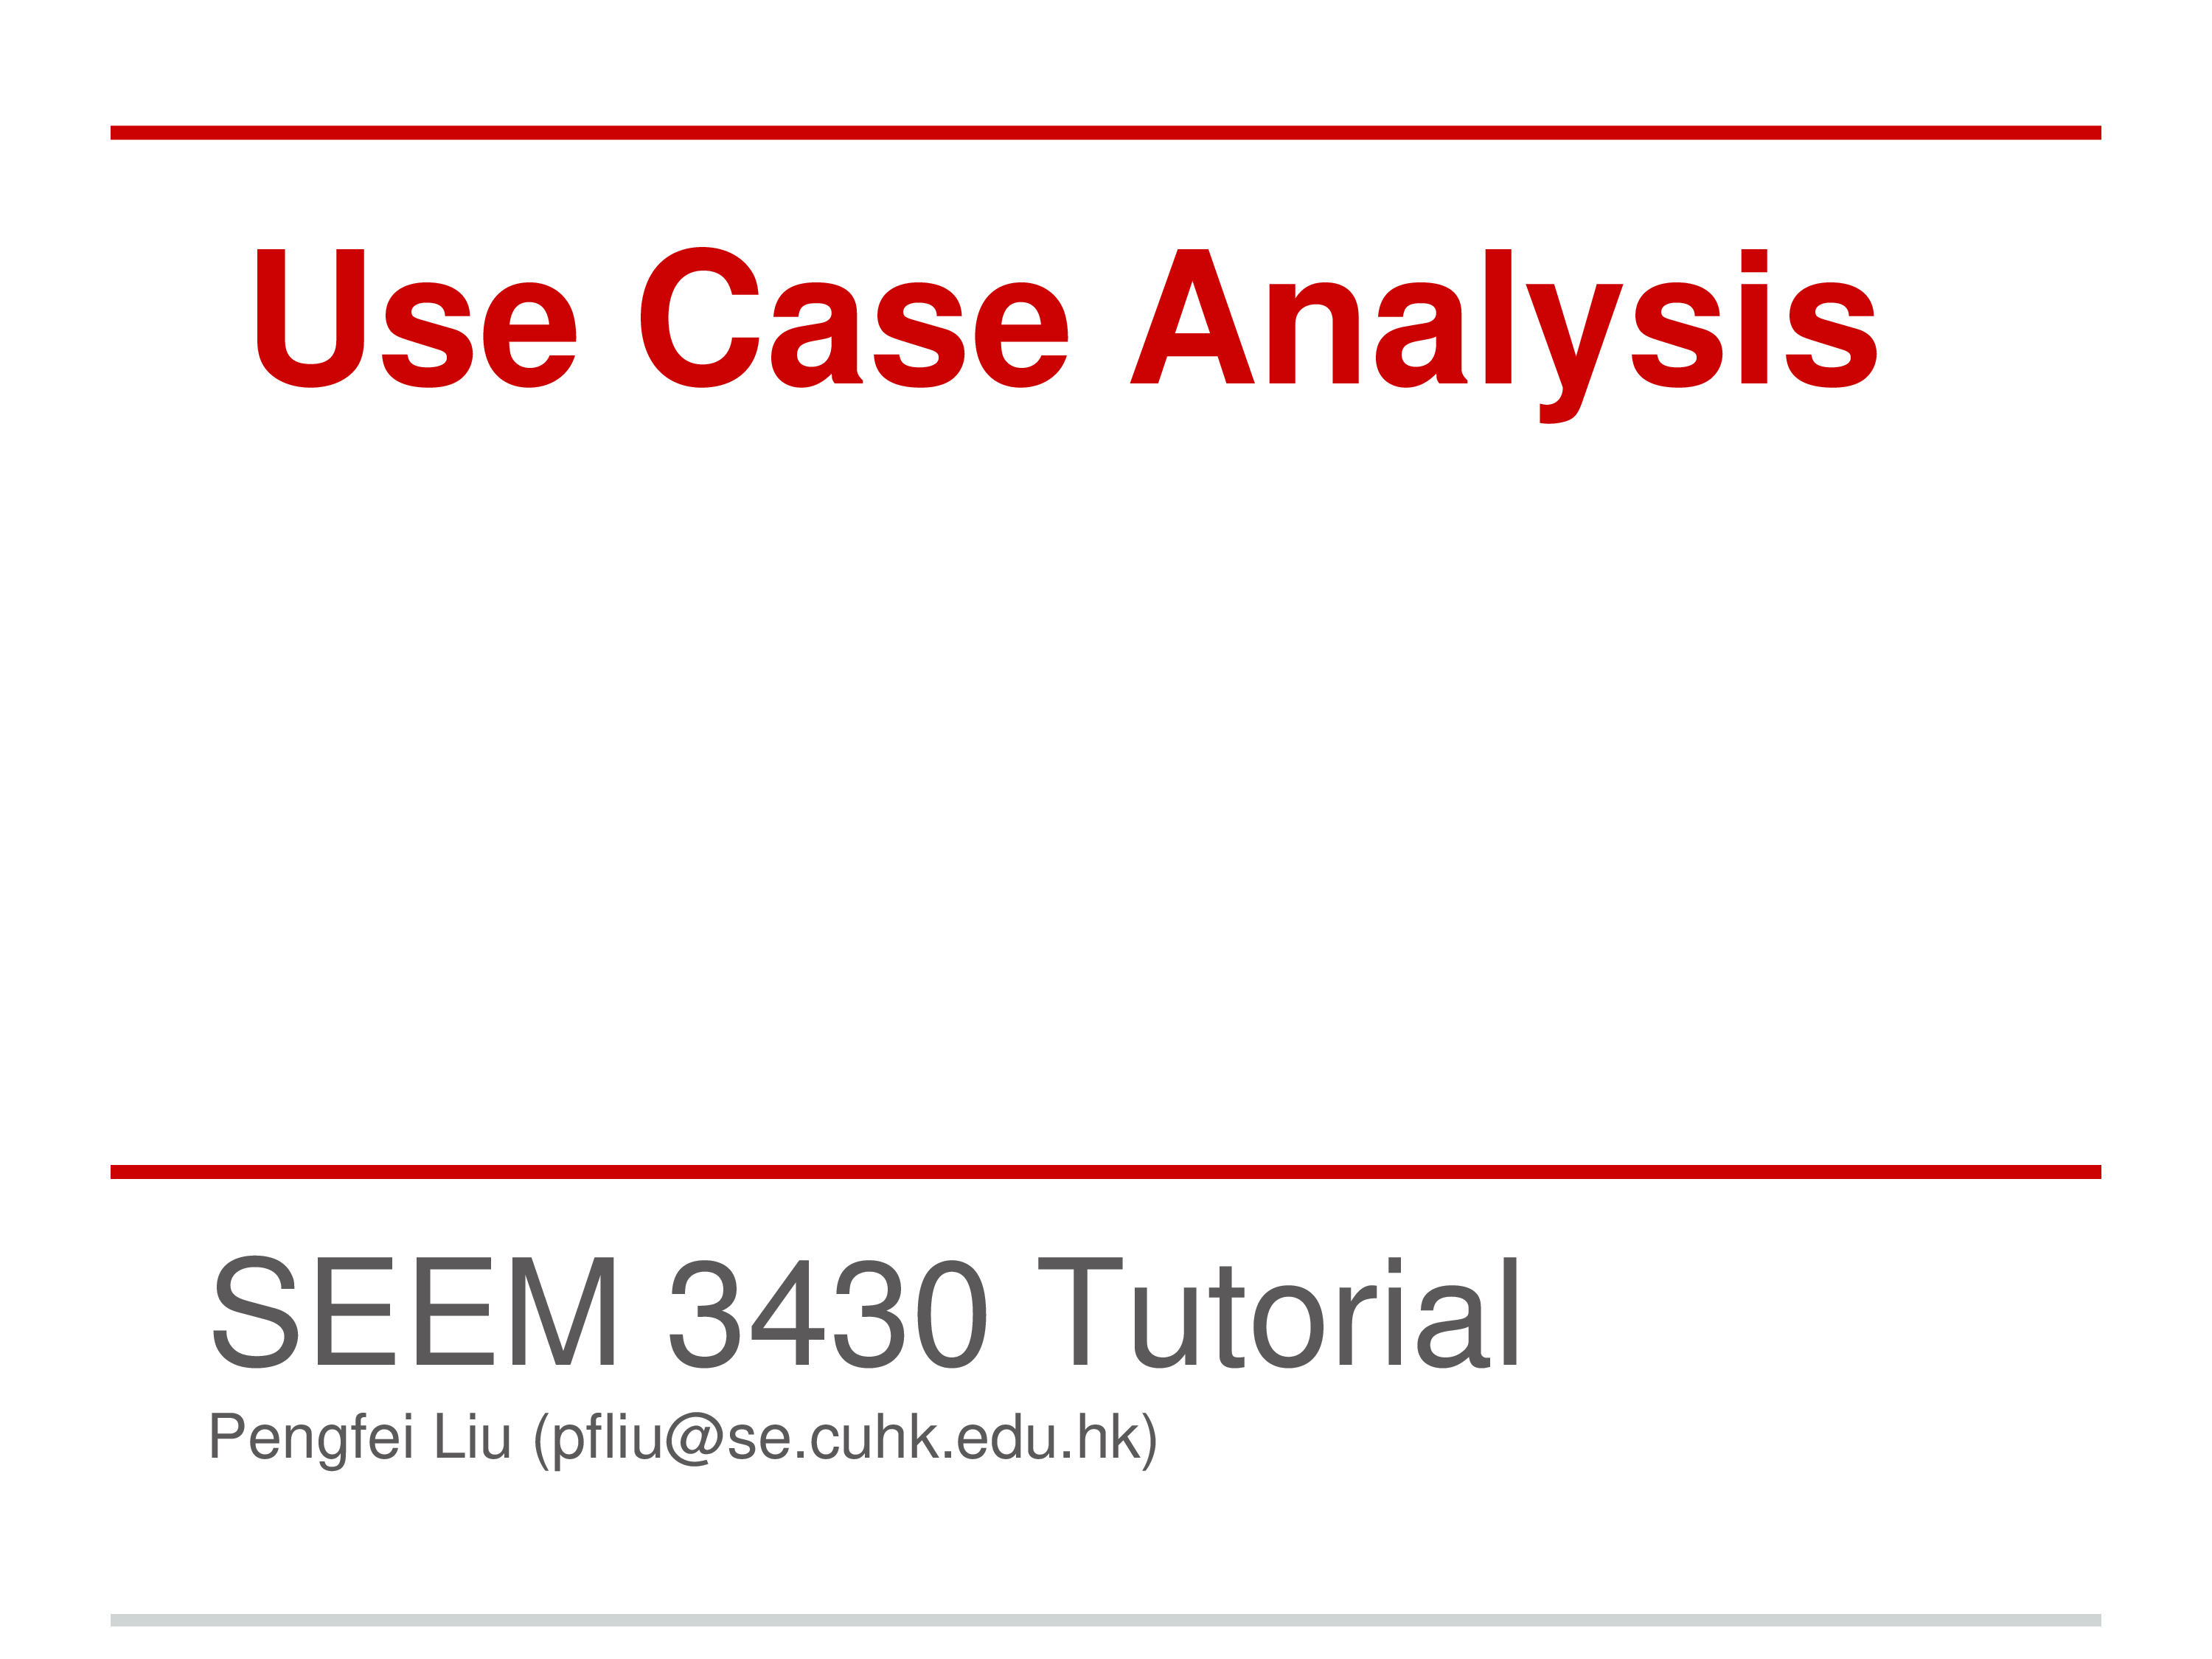 use case analysis plantilla imagen principal